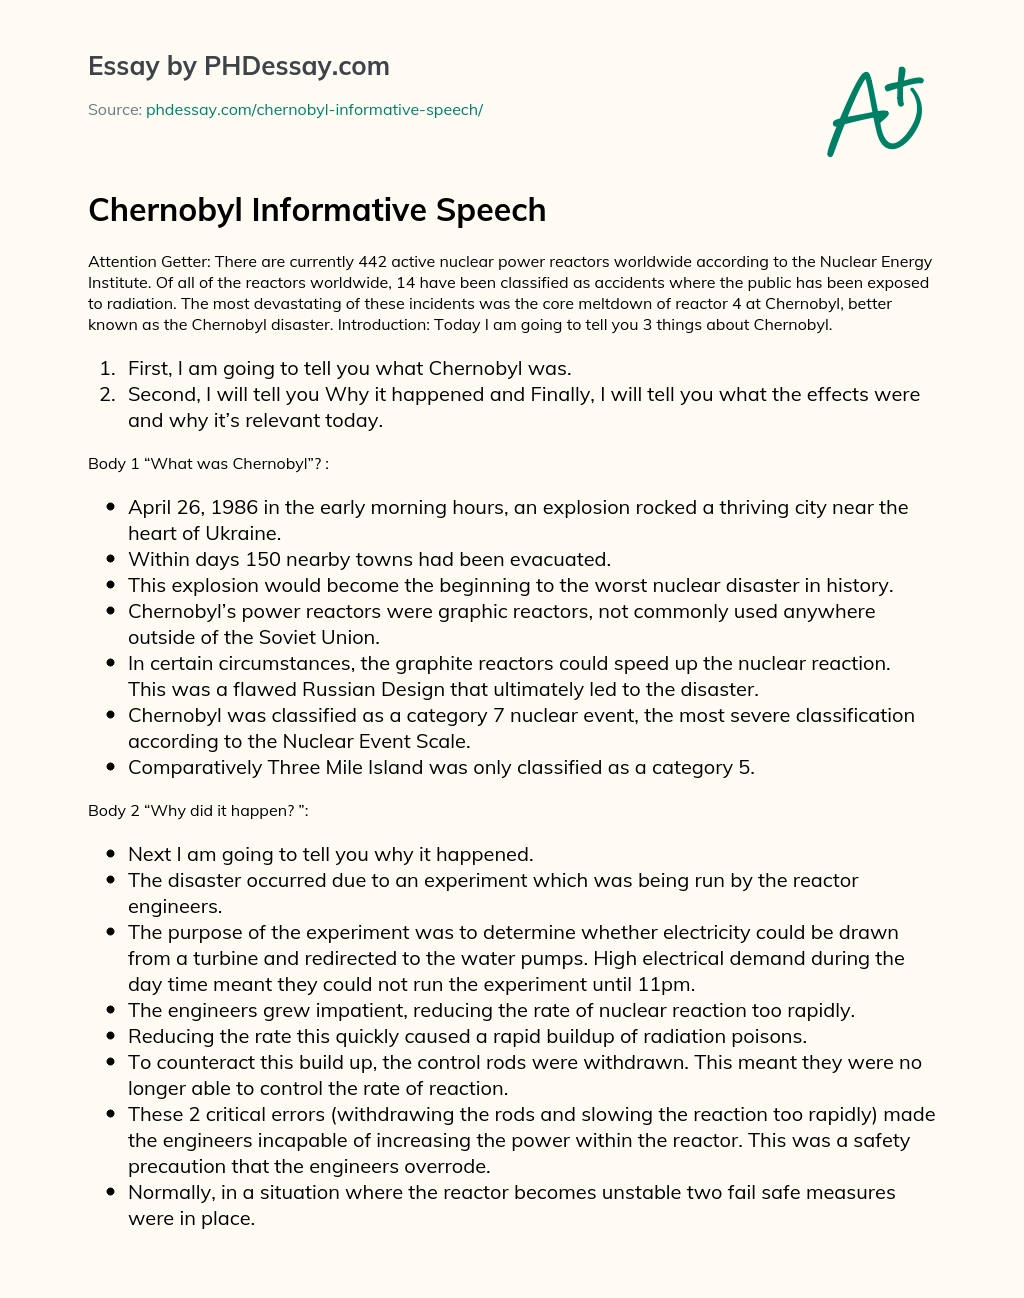 Chernobyl Informative Speech essay